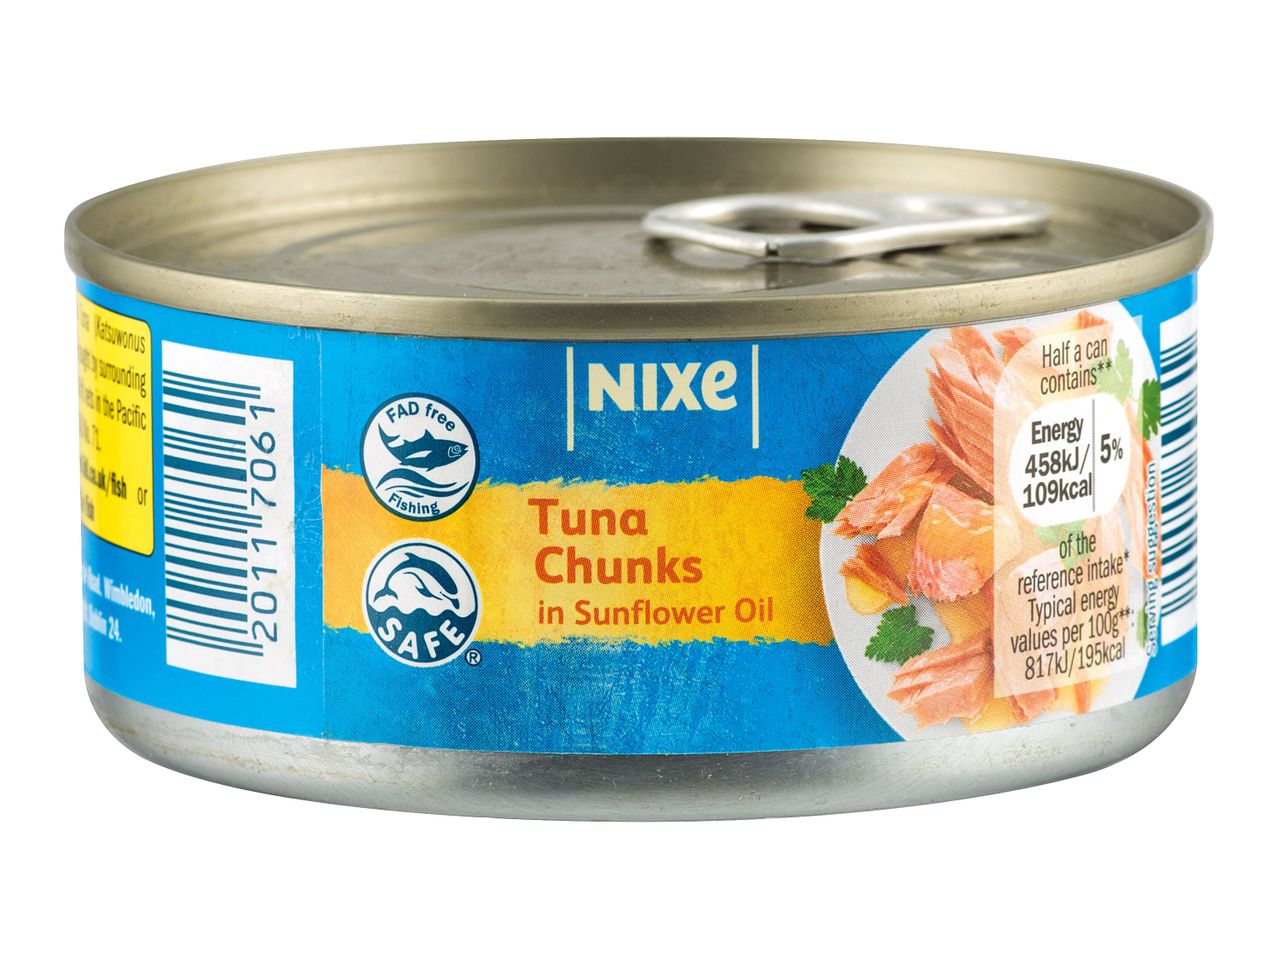 Go to full screen view: Nixe Tuna Chunks in Sunflower Oil - Image 1